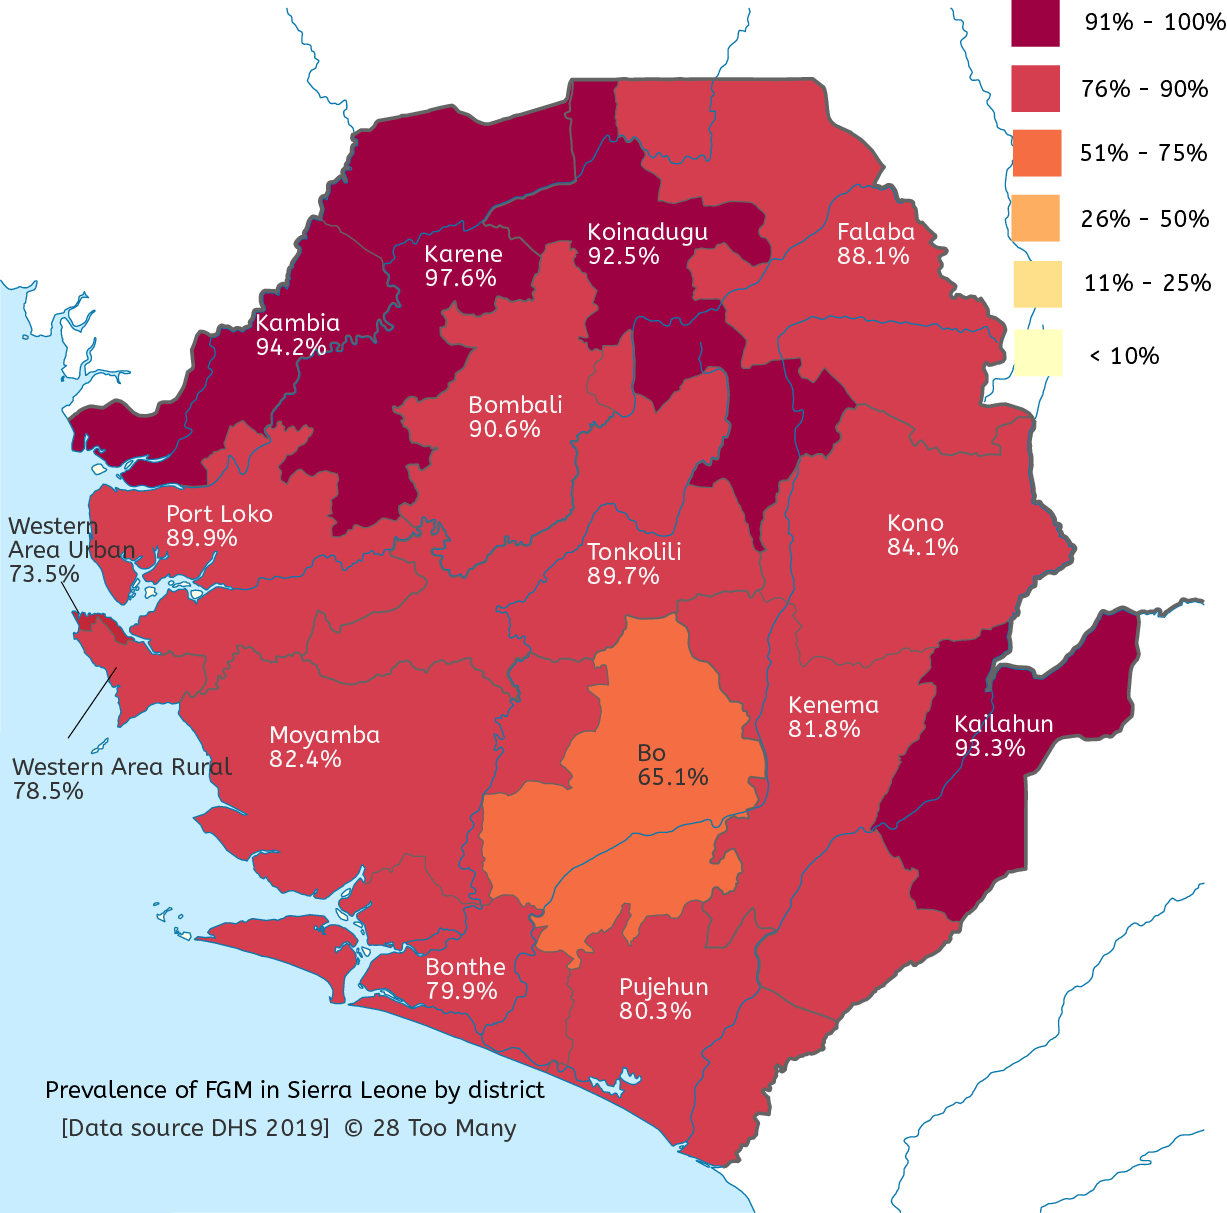 Distribution of FGM/C across Sierra Leone